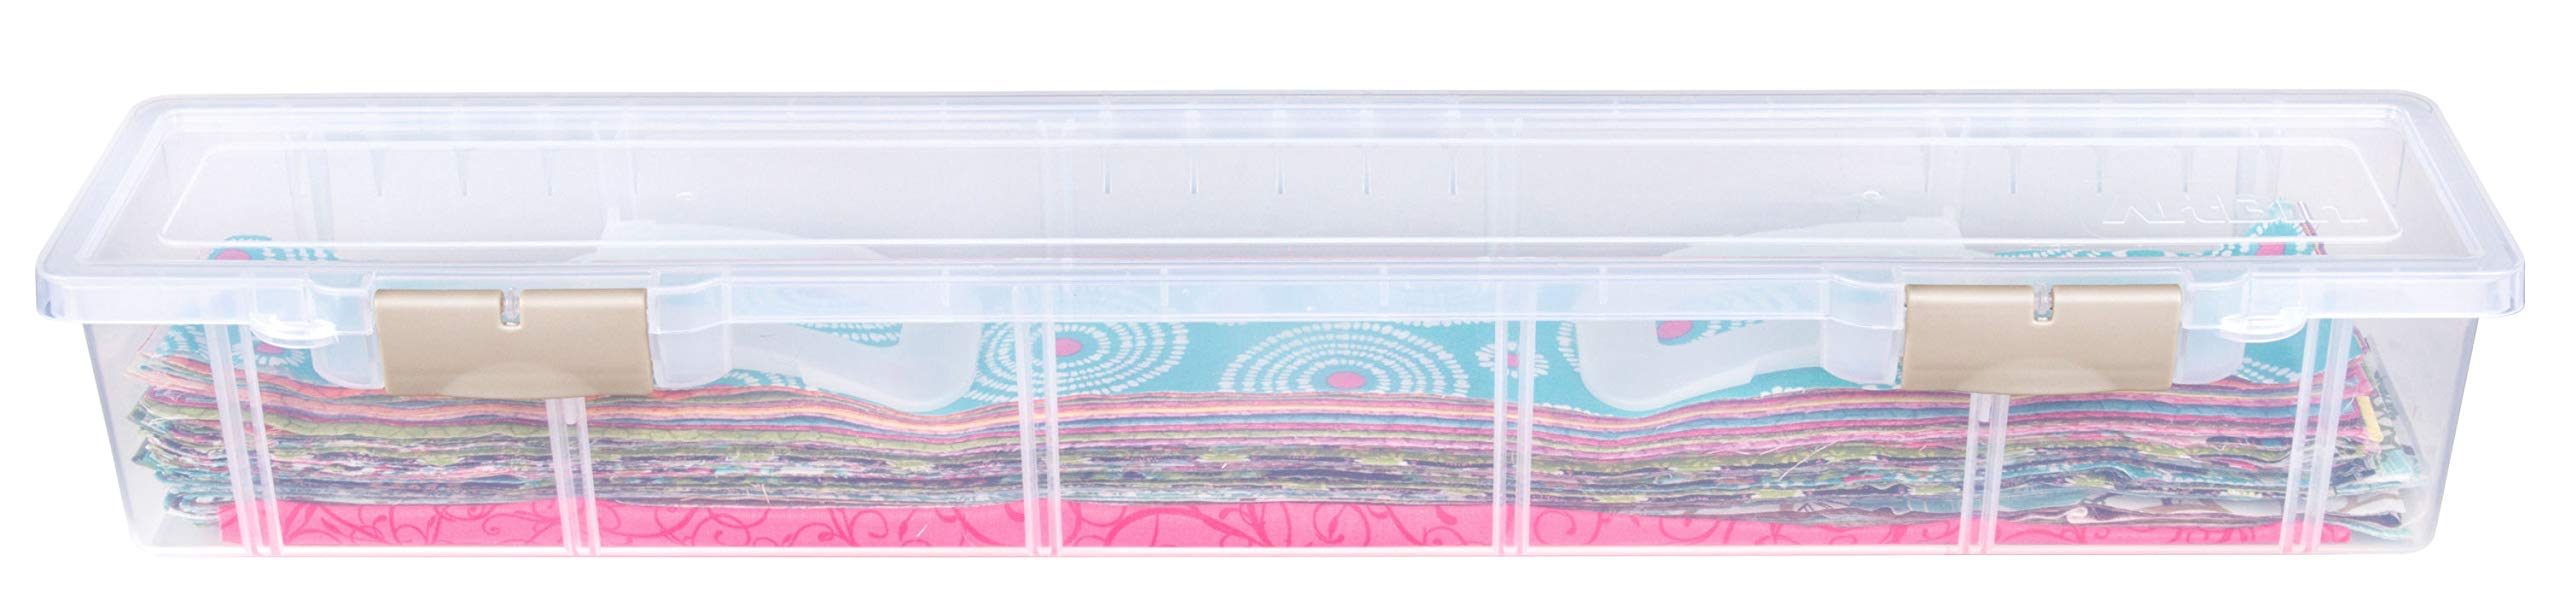 ArtBin 6999AB Fabric Strip Case - Crafts, Quiliting & Sewing Organizer, [1] Plastic Storage Case, Clear